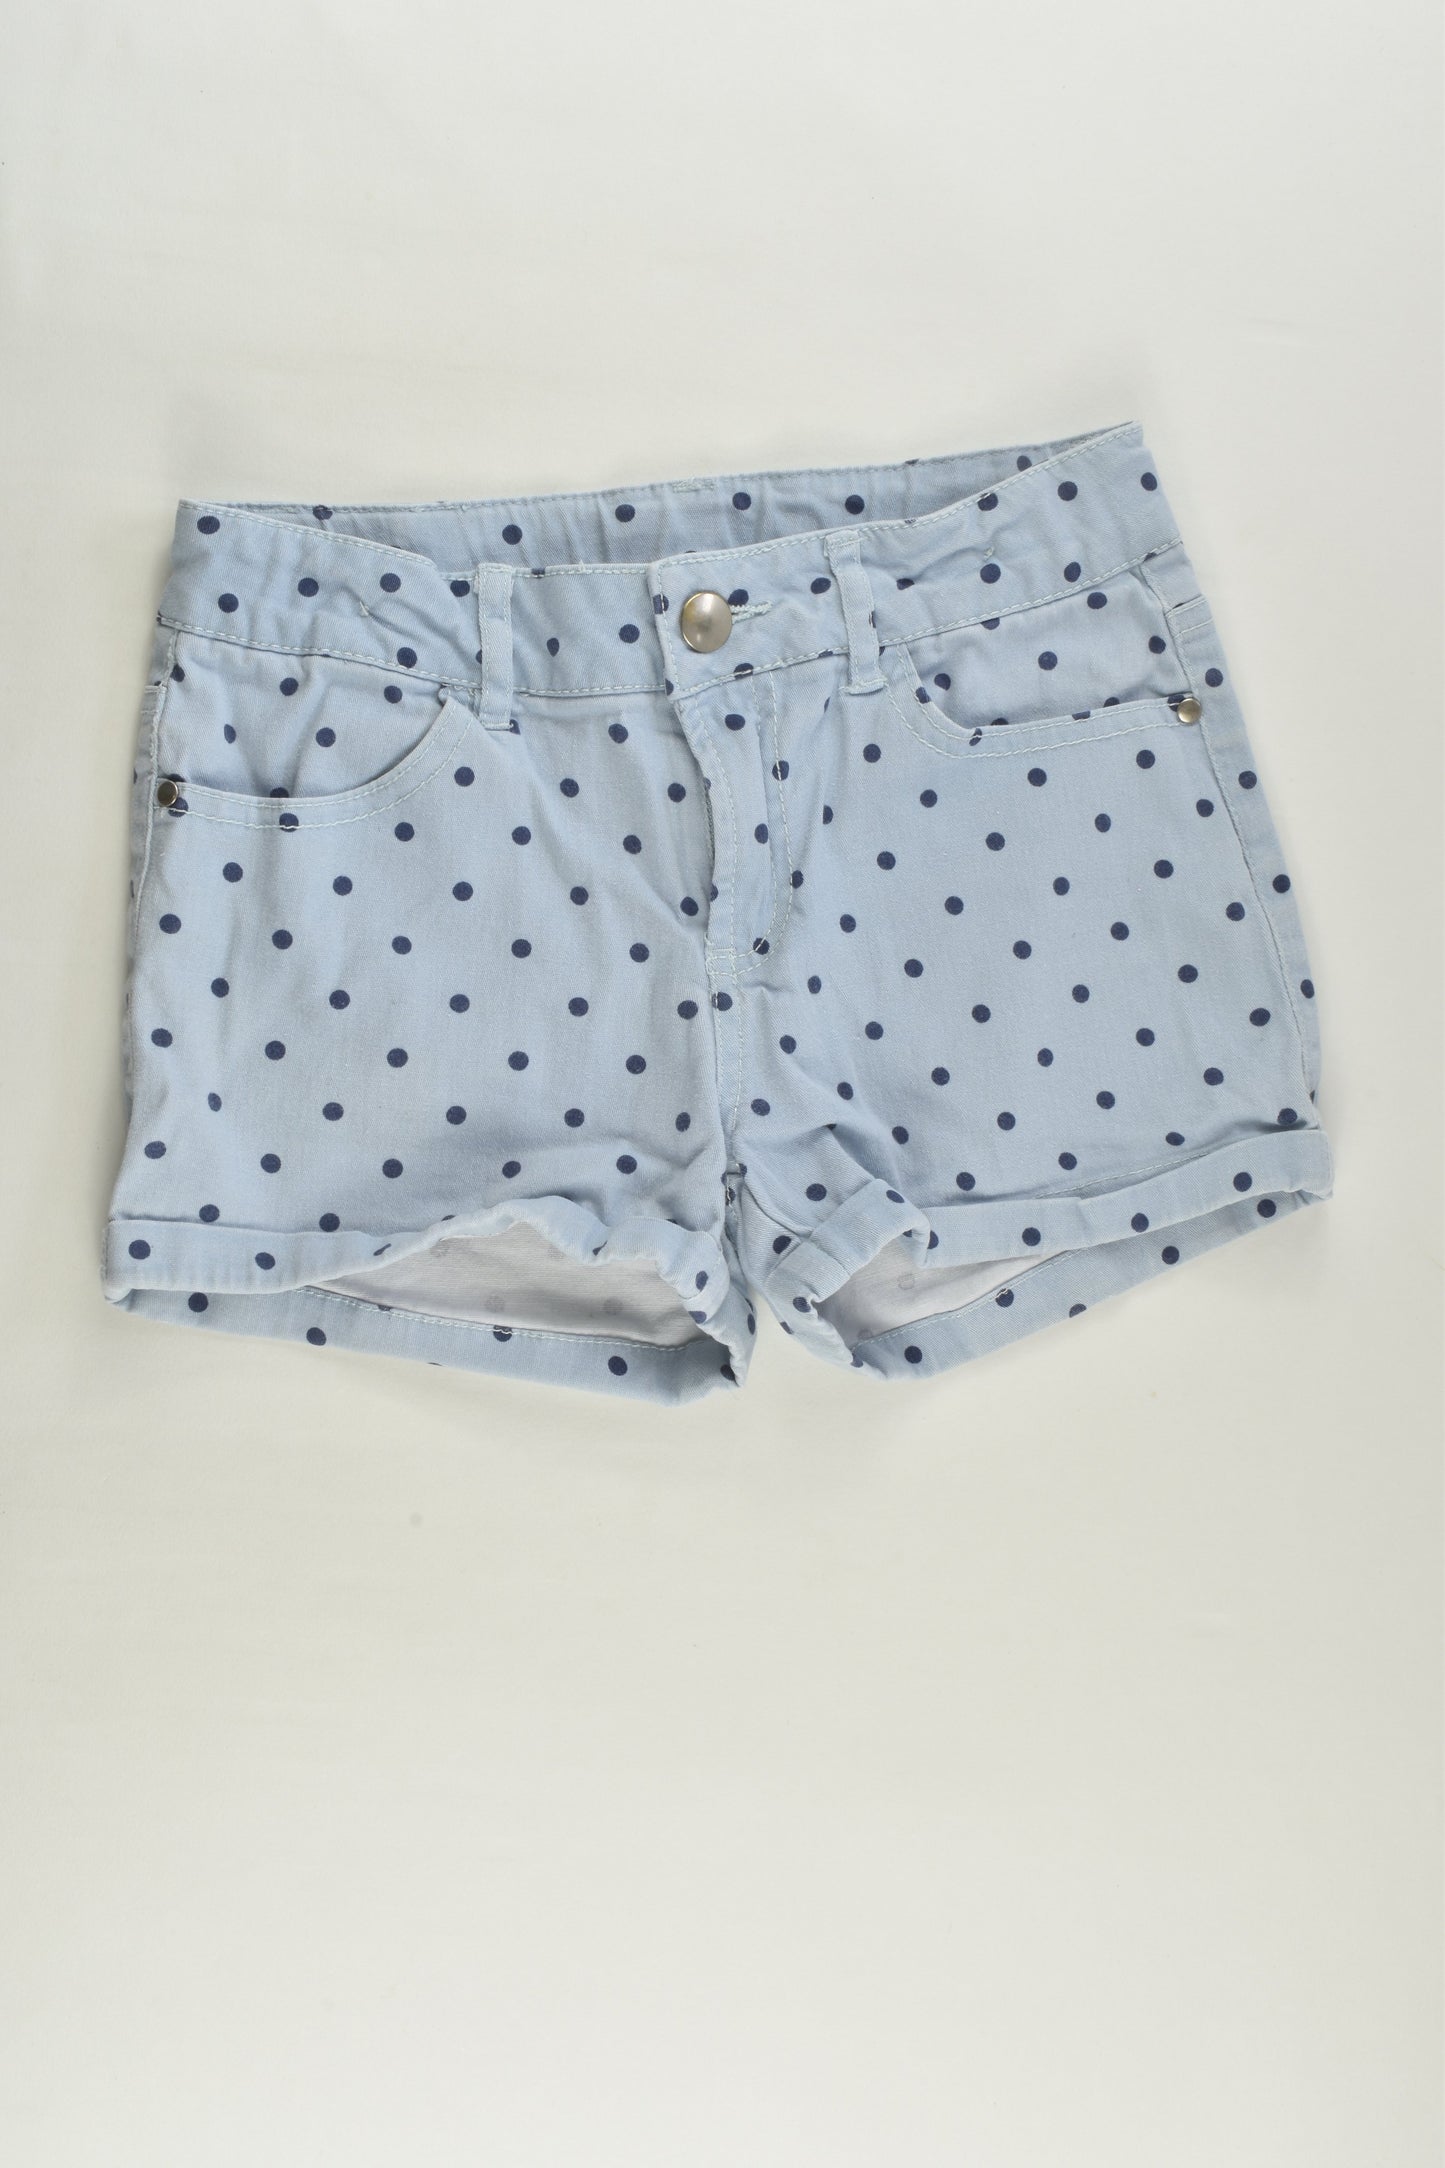 Miss Understood Size 10 Stretchy Polka Dots Shorts